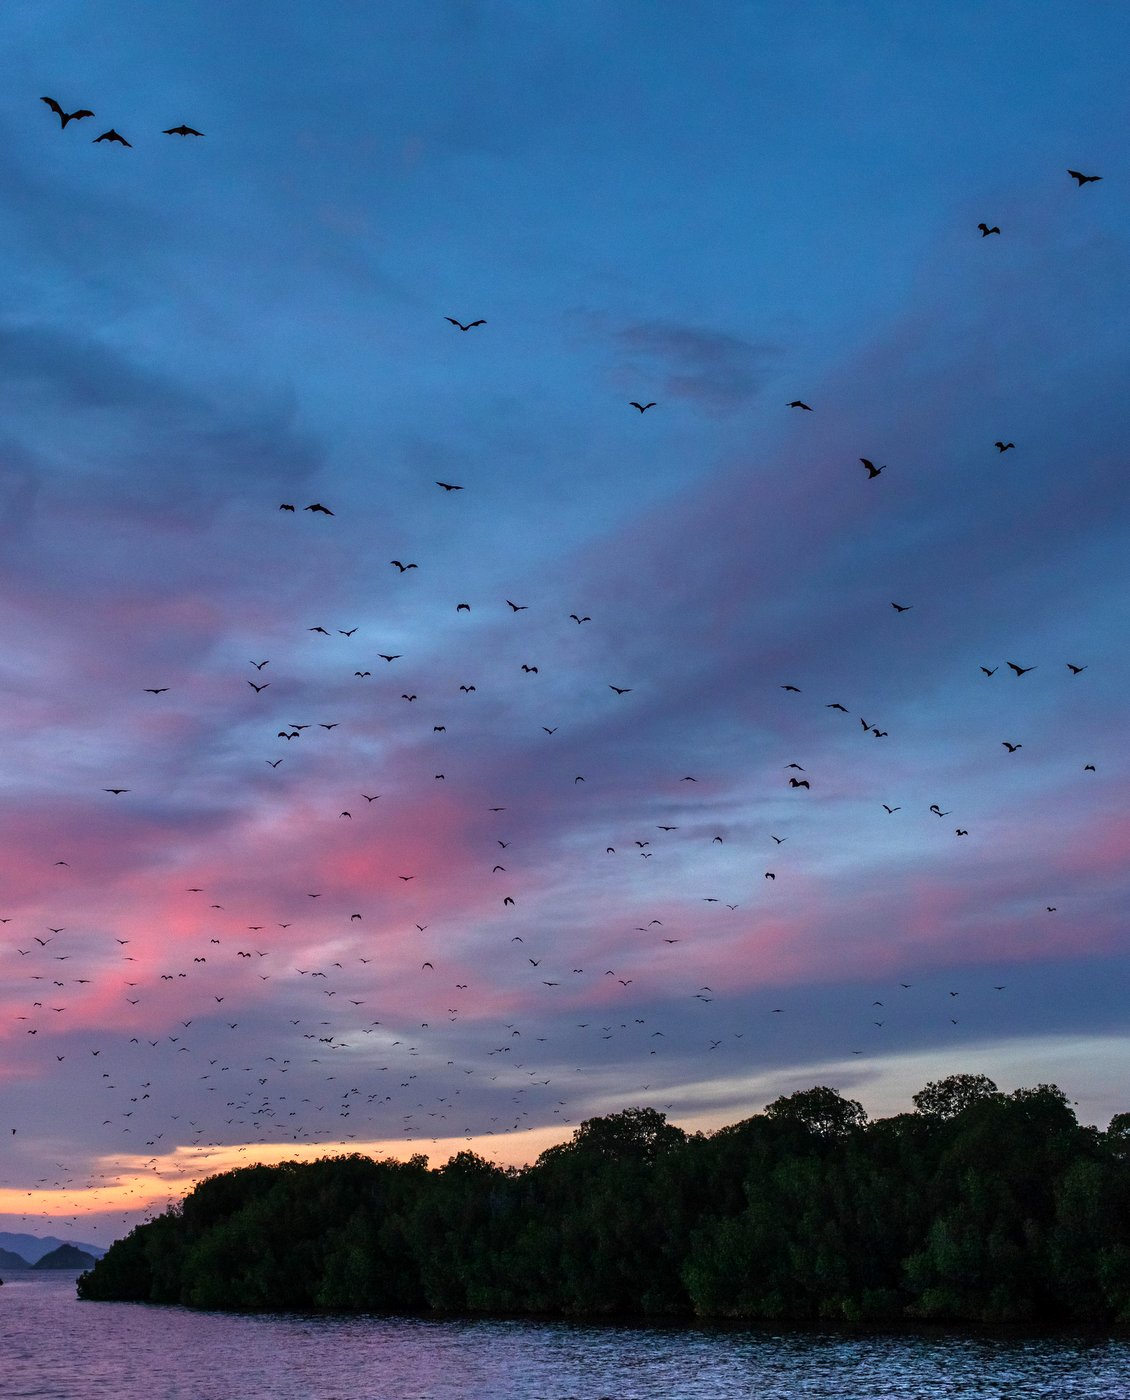 Fox bat flying in the sunset sky on Kalong Island (Fruit Bat Island)